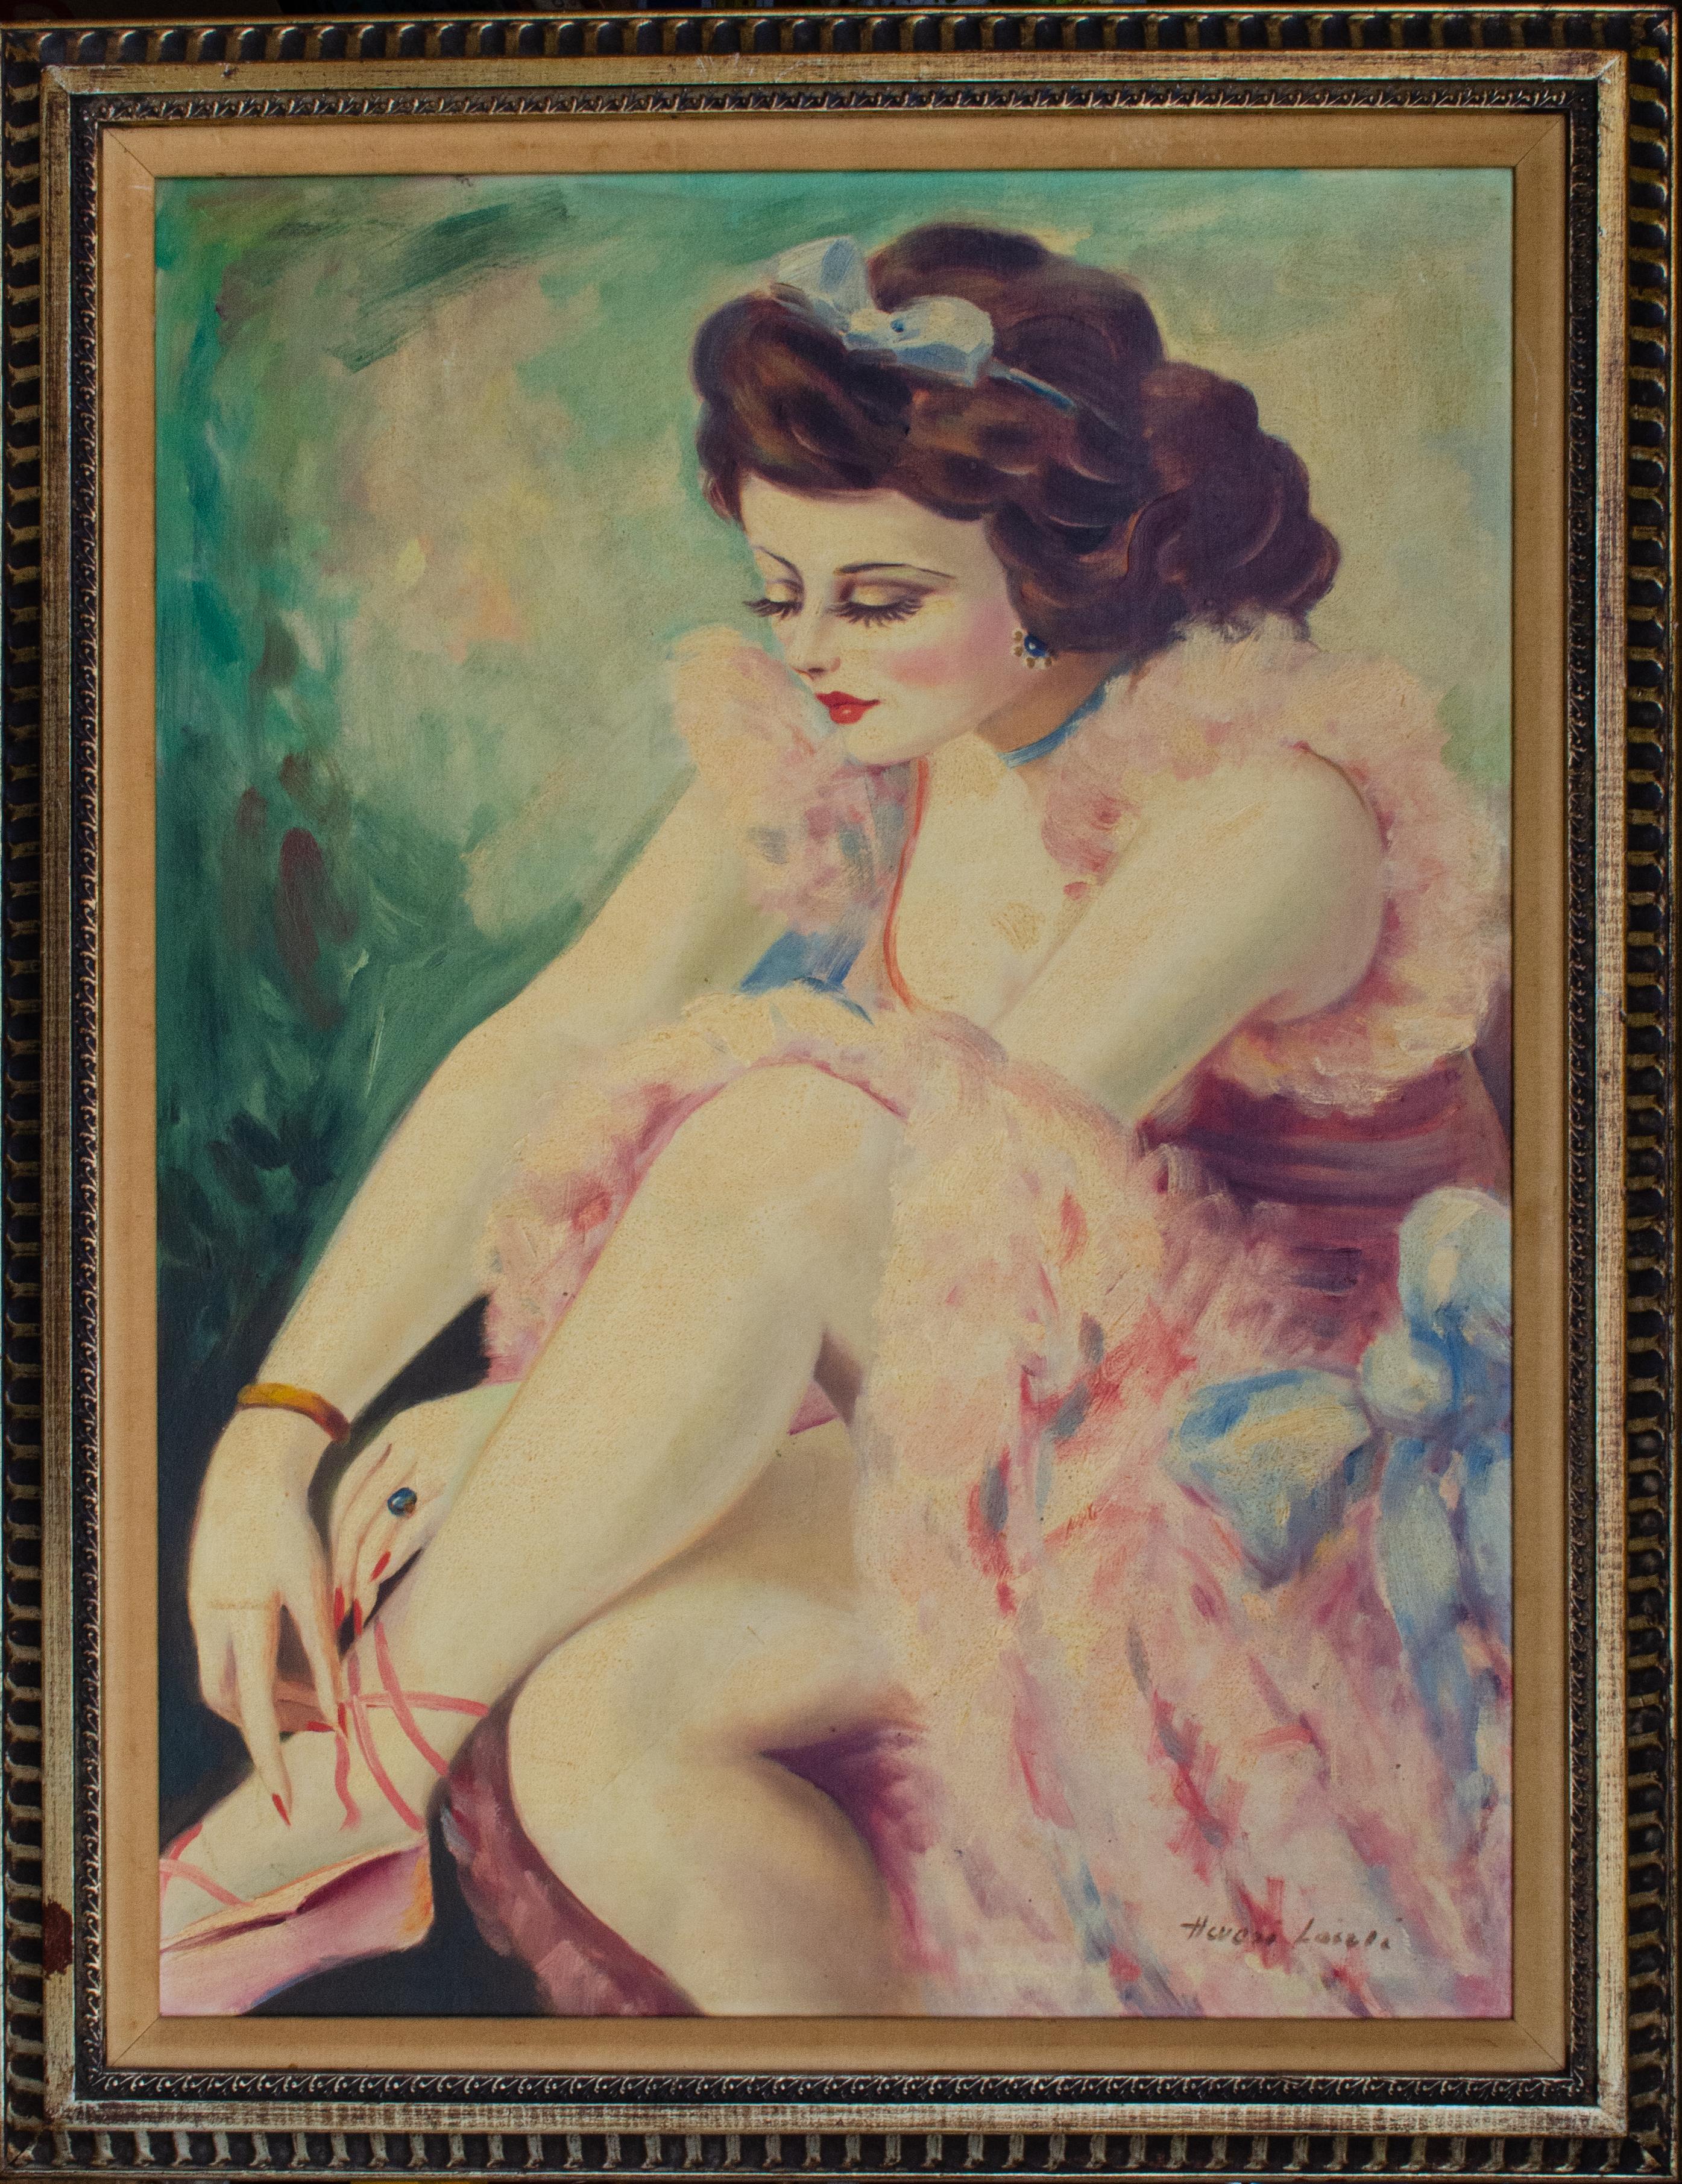 Unknown Portrait Painting - Art Nouveau Ballerina Painting by Mystery European Artist